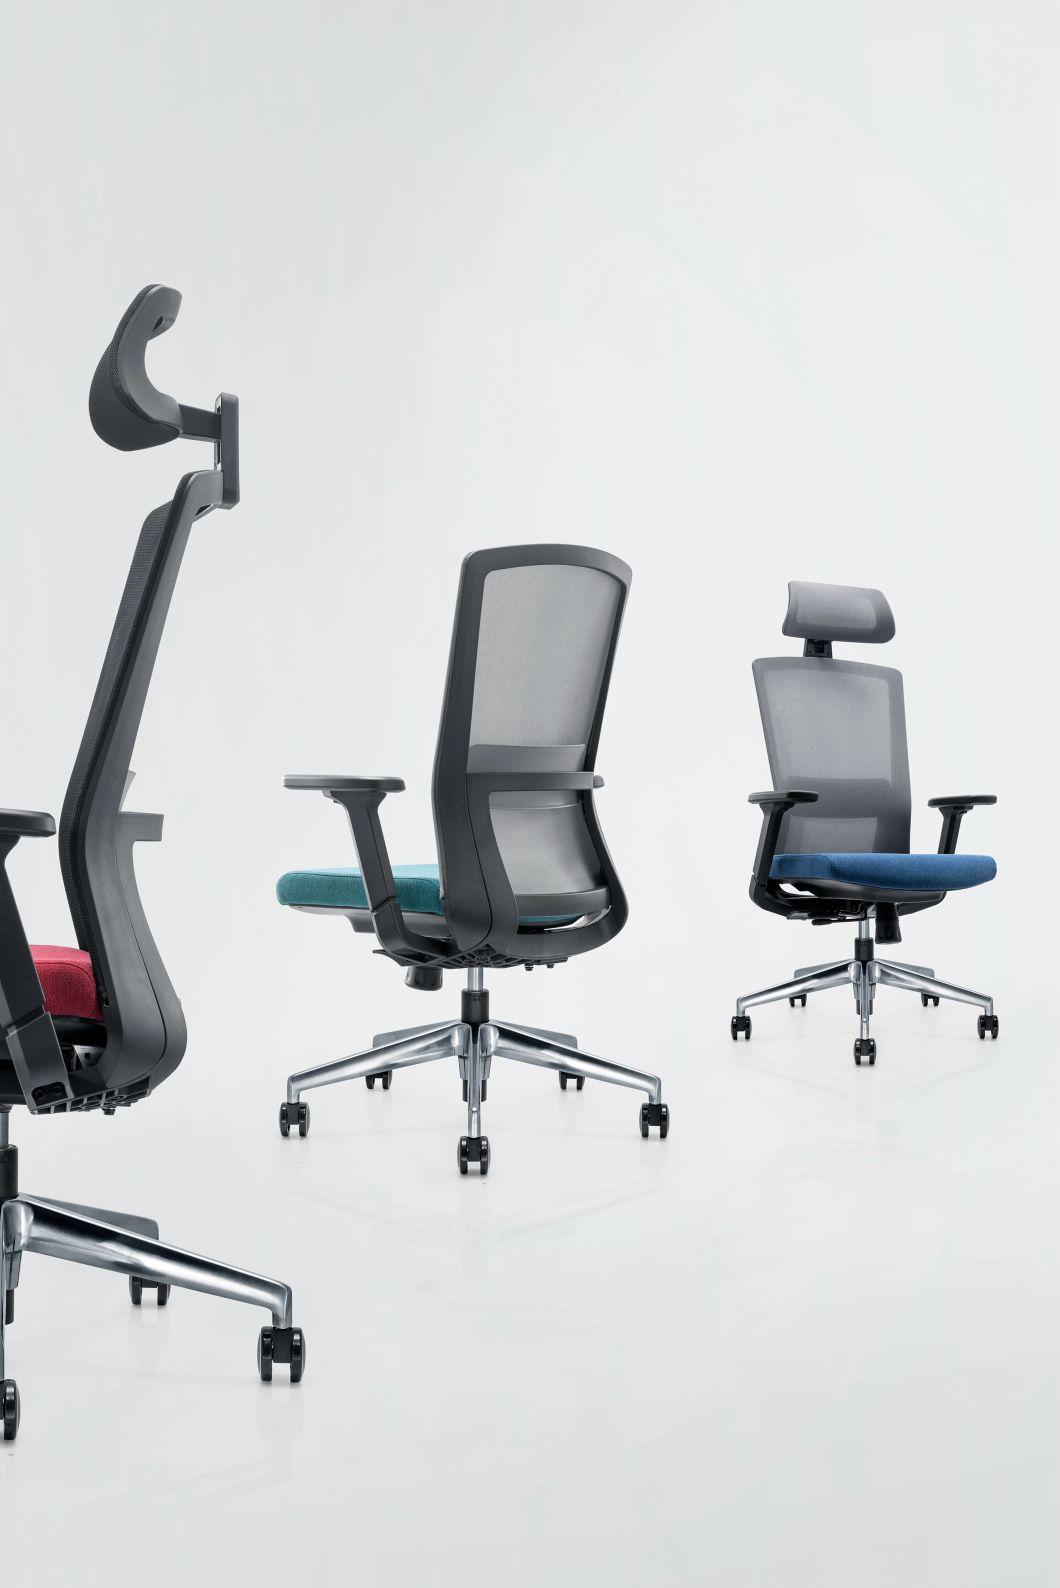 New Foshan European Swivel Boss Metal Fabric Home Mesh Chair Office Furniture